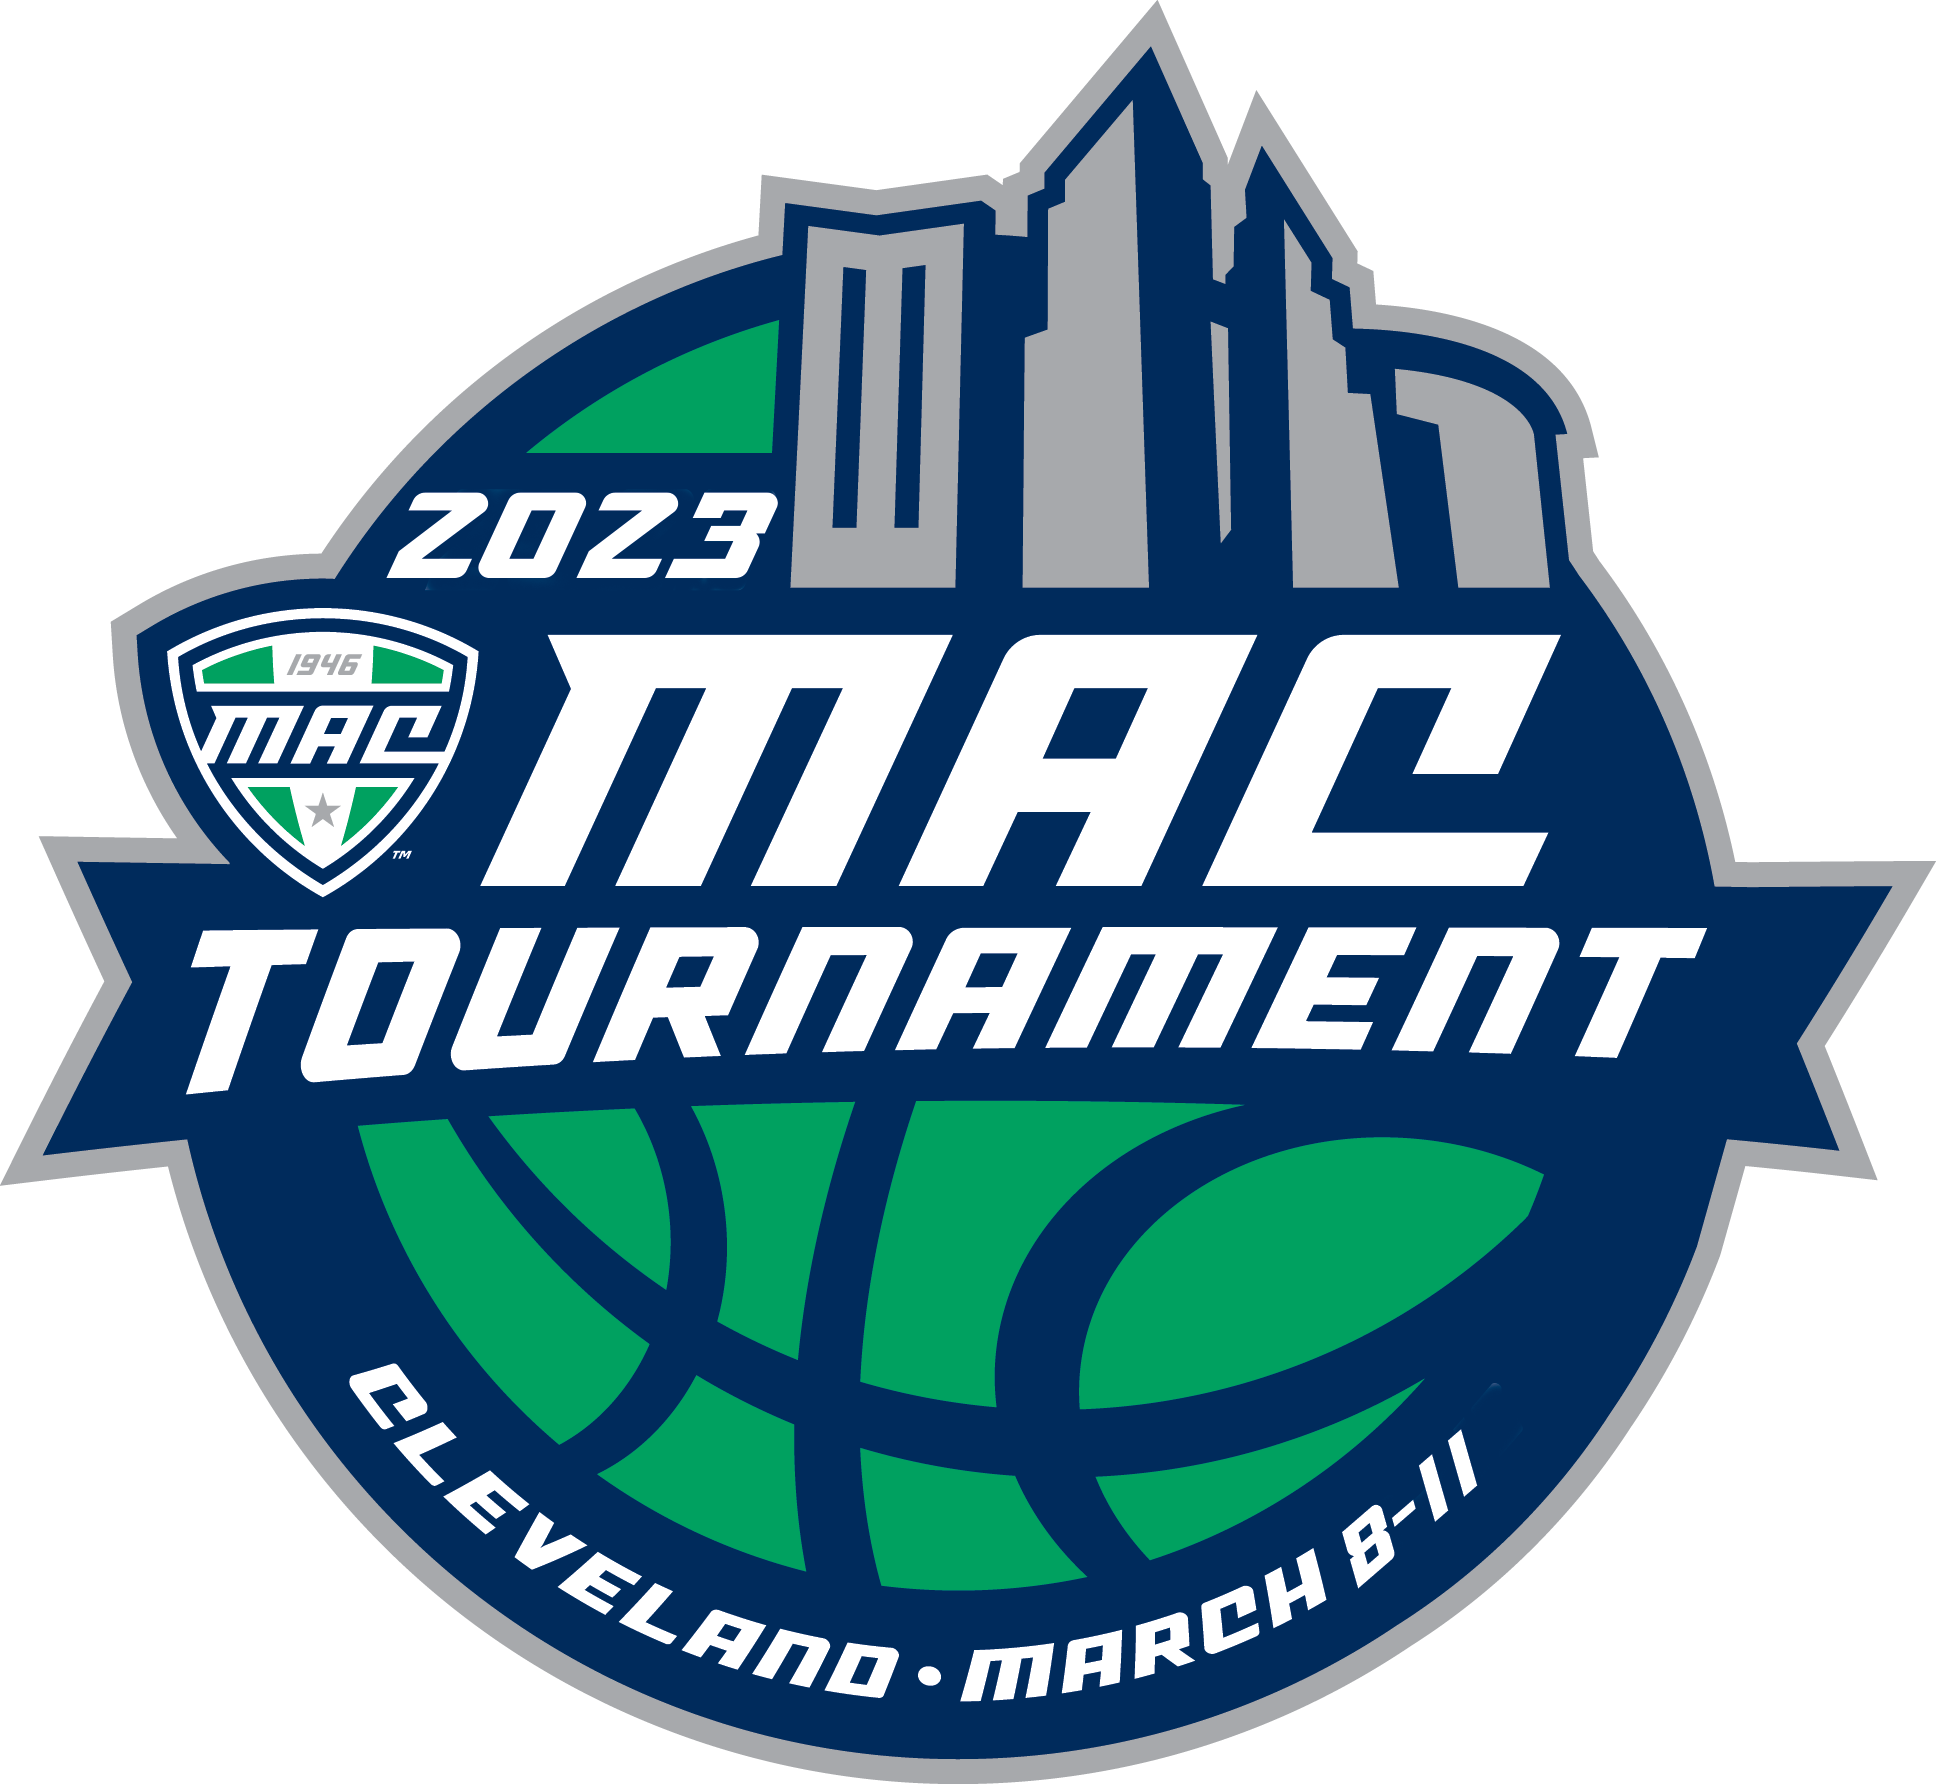 MAC Mens Basketball Tournament - Quarterfinals at Rocket Mortgage FieldHouse